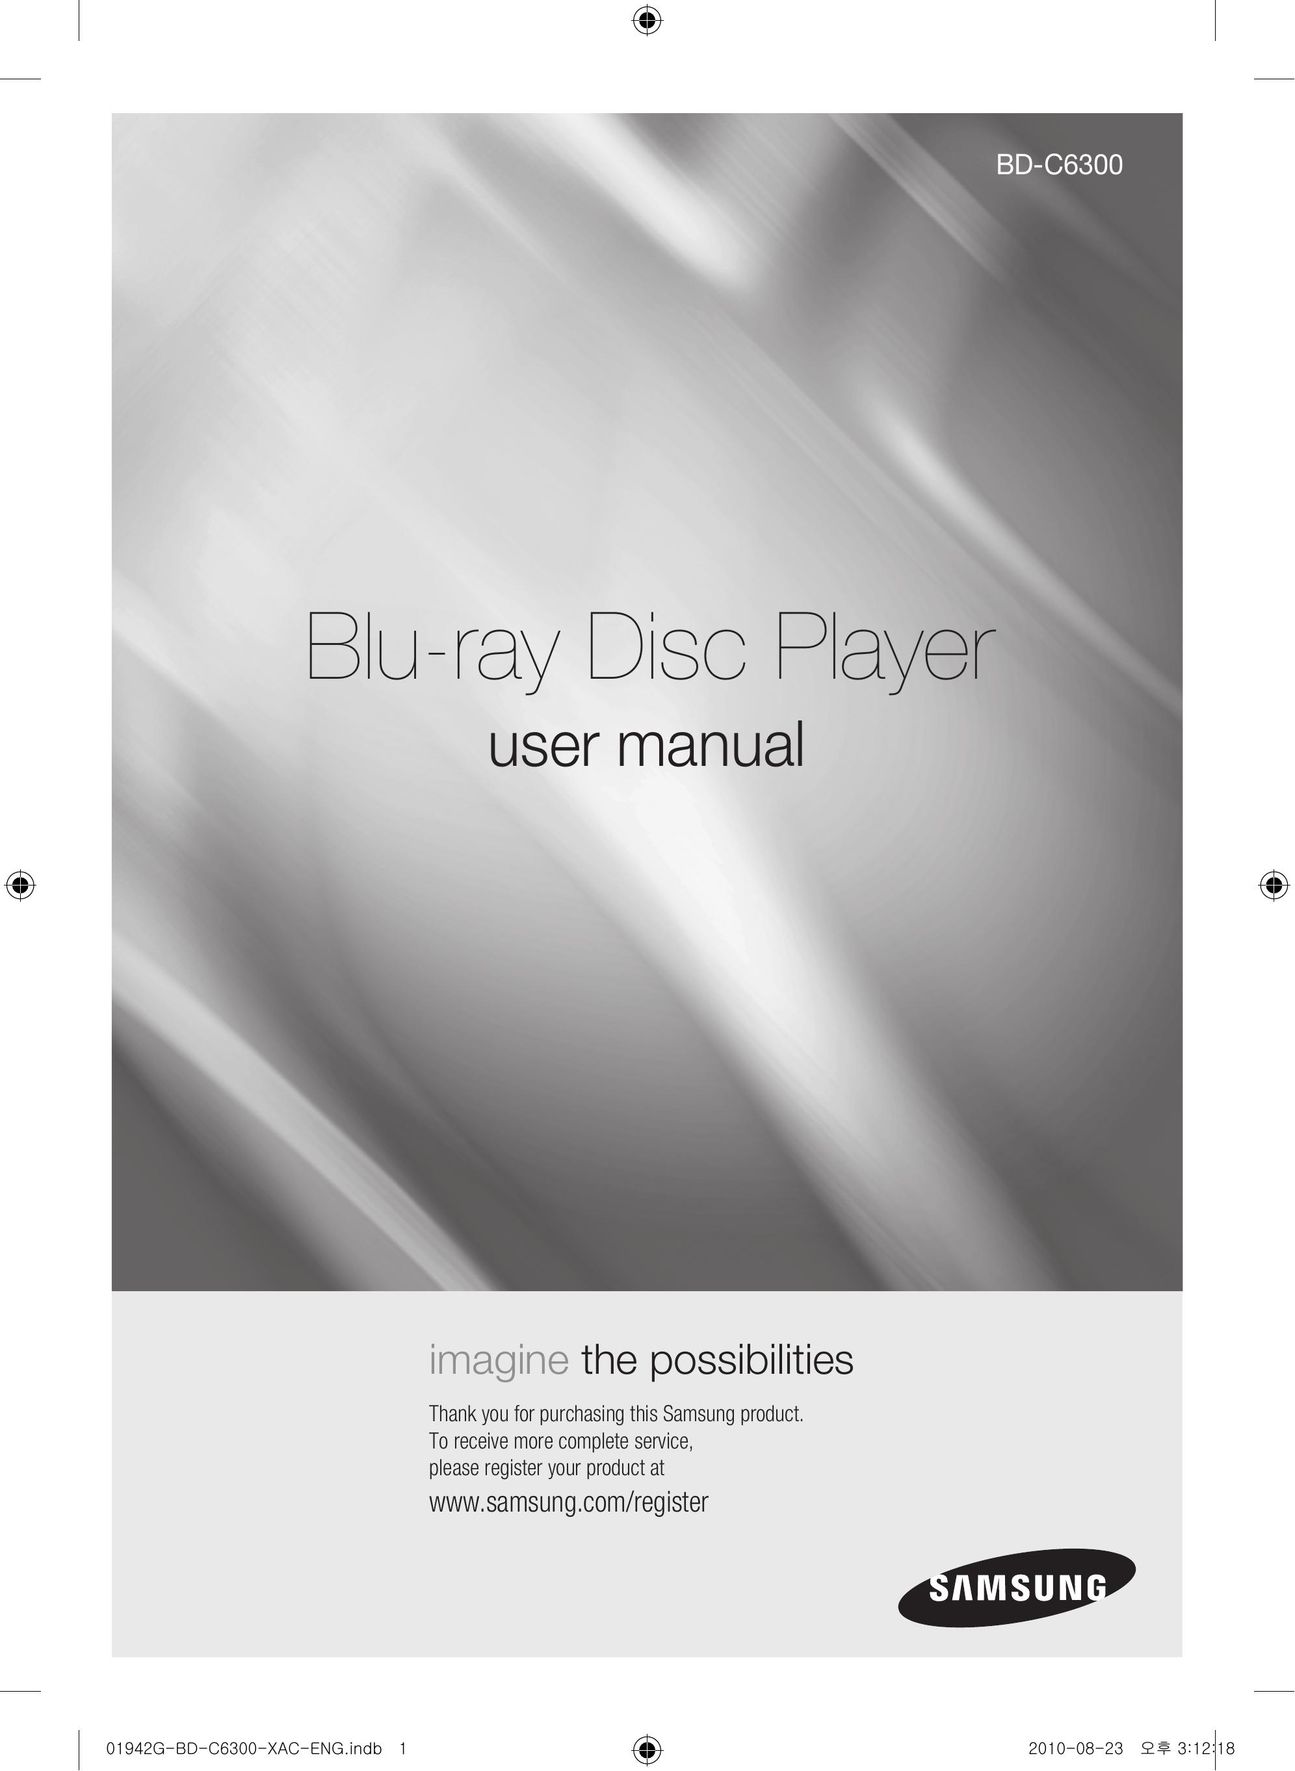 Samsung BD-C6300 Blu-ray Player User Manual